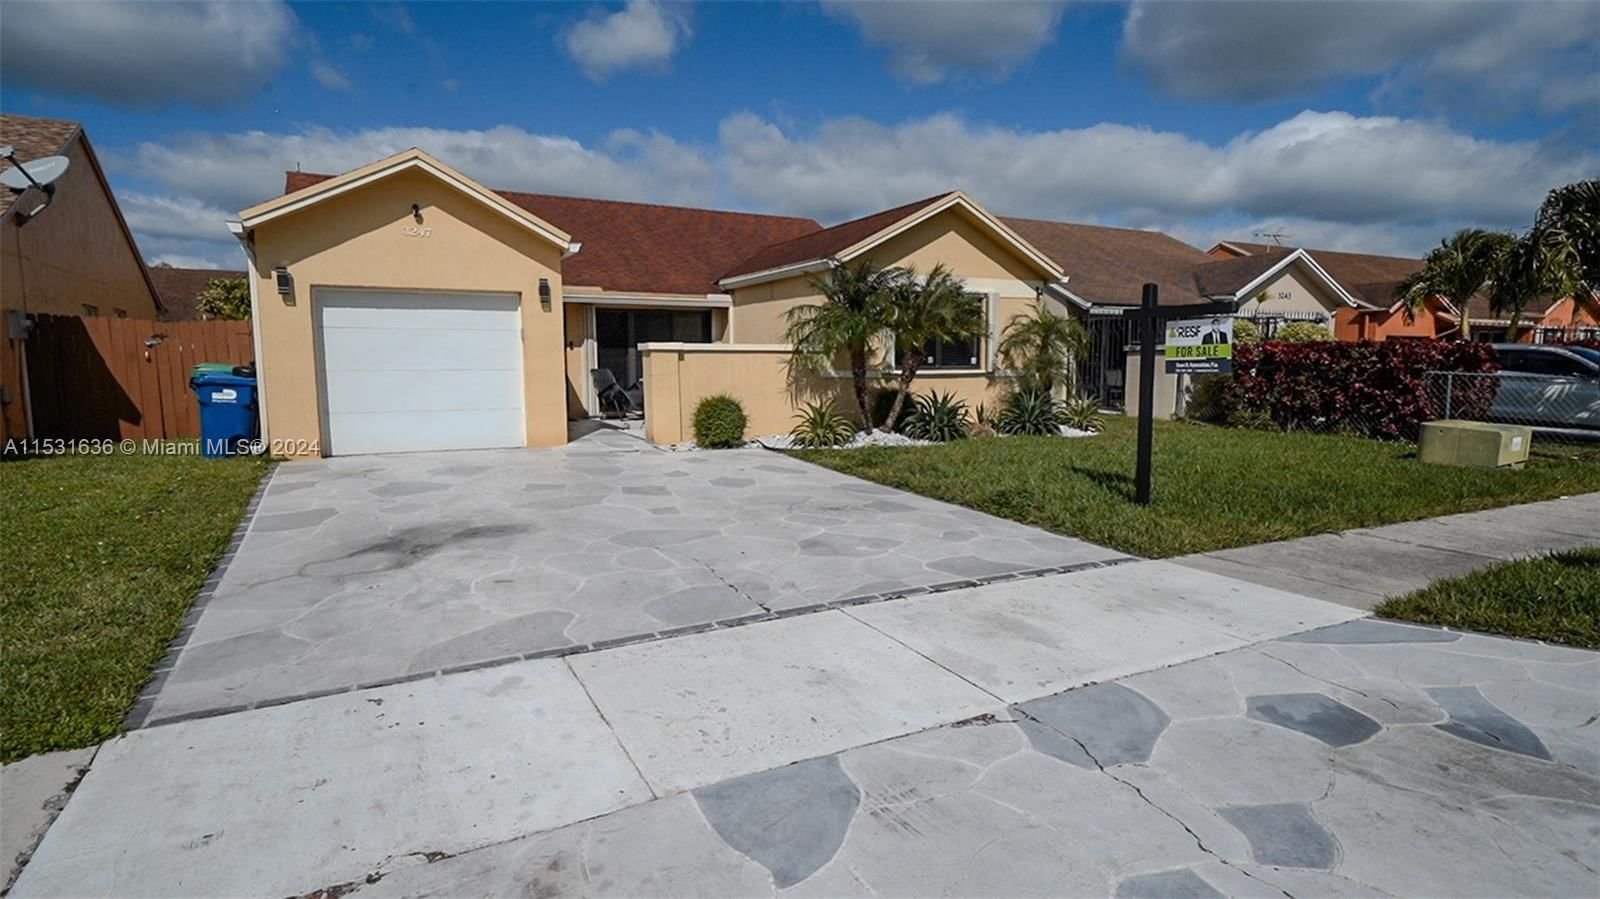 Real estate property located at 3247 203 Lane, Miami-Dade County, LESLIE PATIO HOMES SEC 4, Miami Gardens, FL